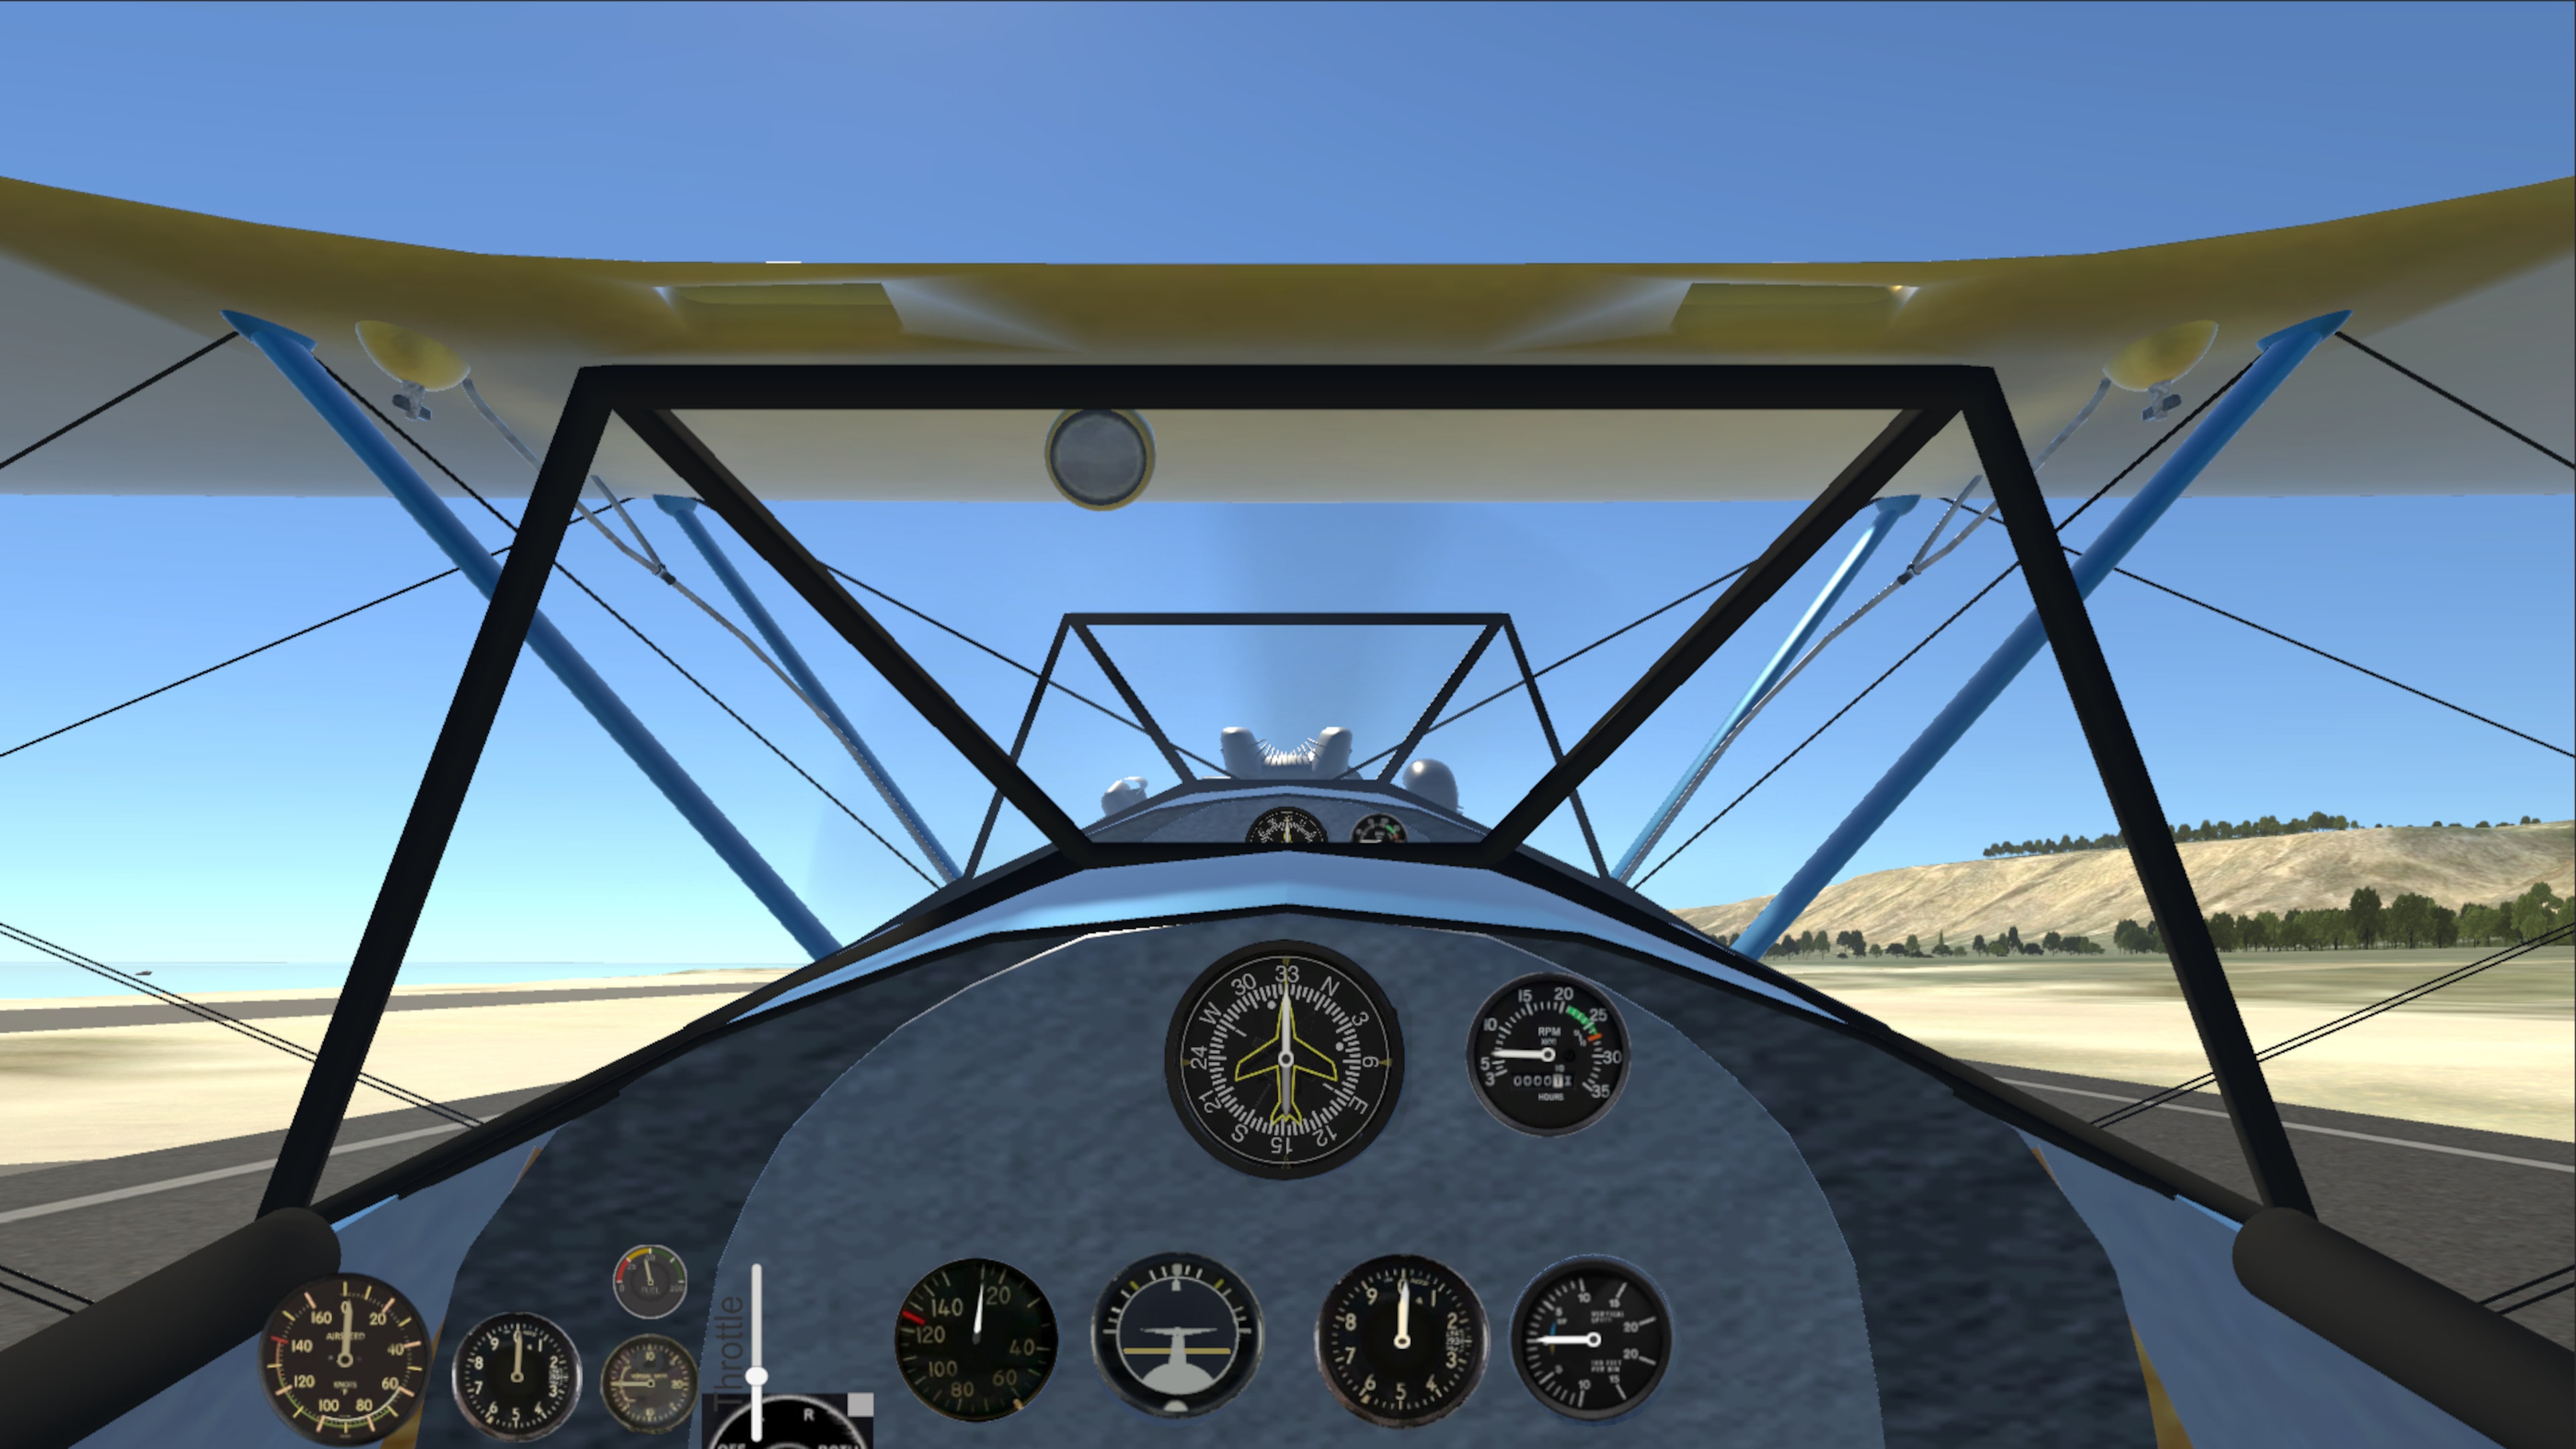 Universal Flight Simulator on PS4 — price history, screenshots, discounts •  USA